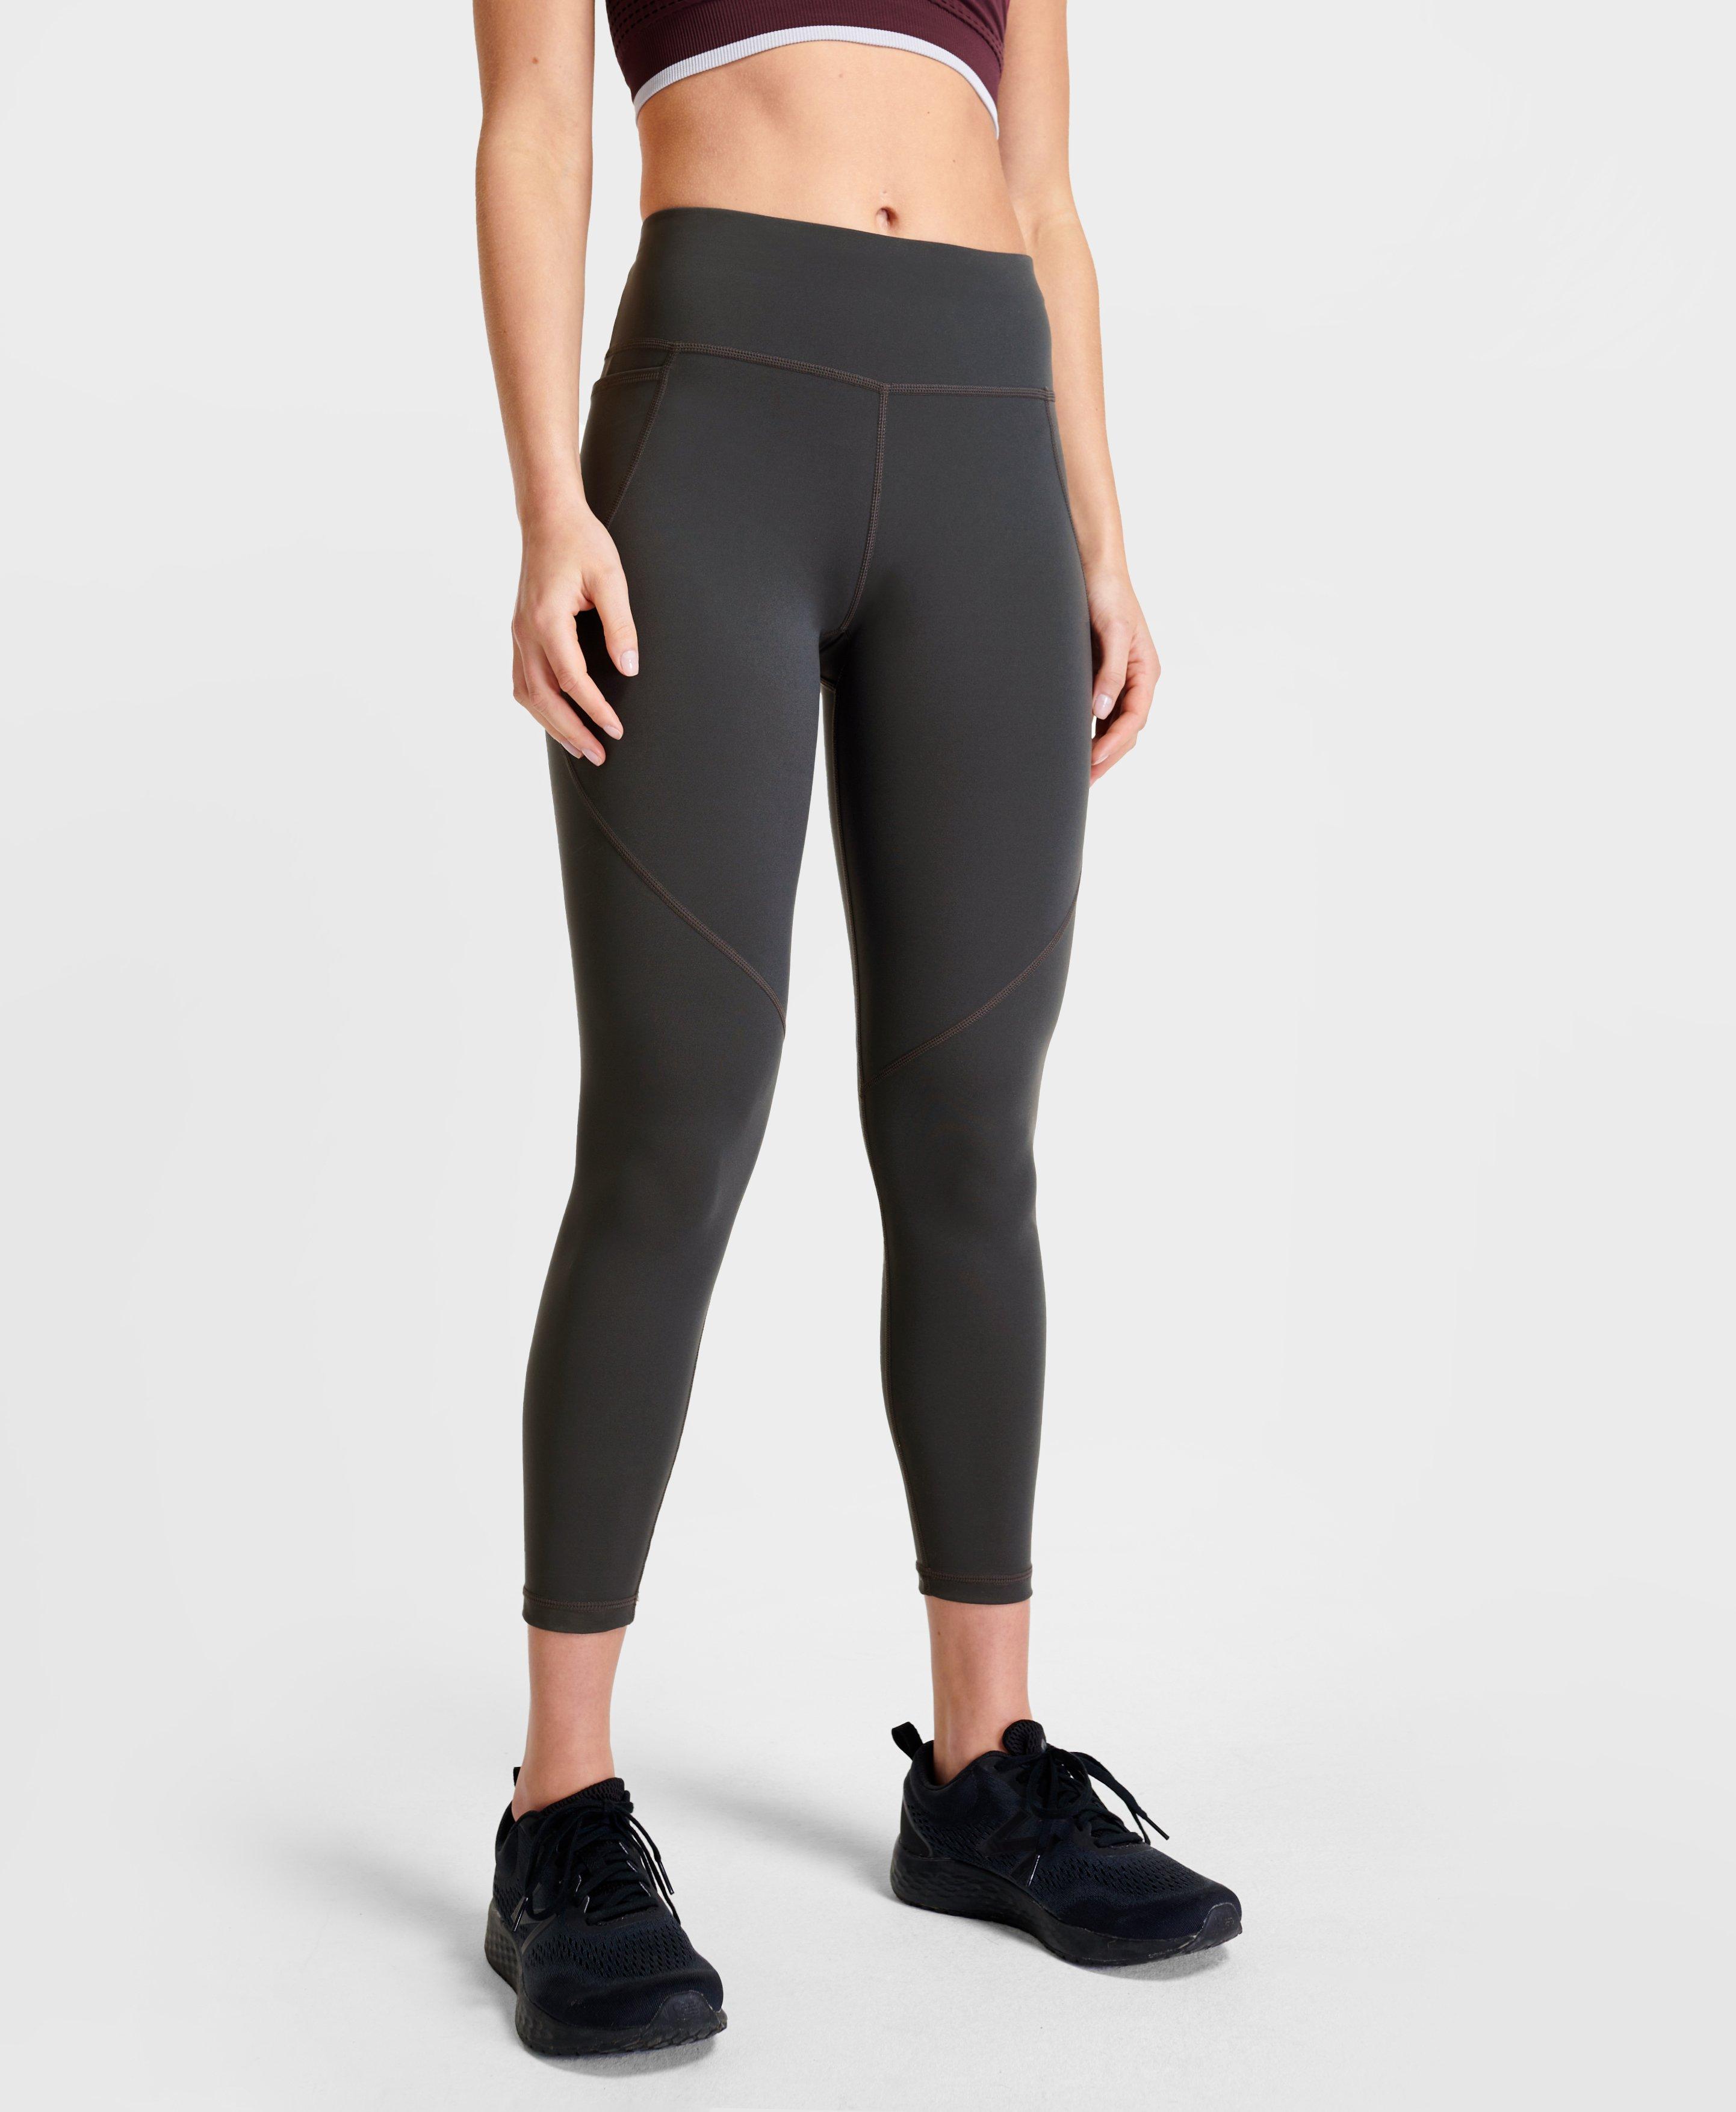 Nike Running Fast Tight cropped leggings in black